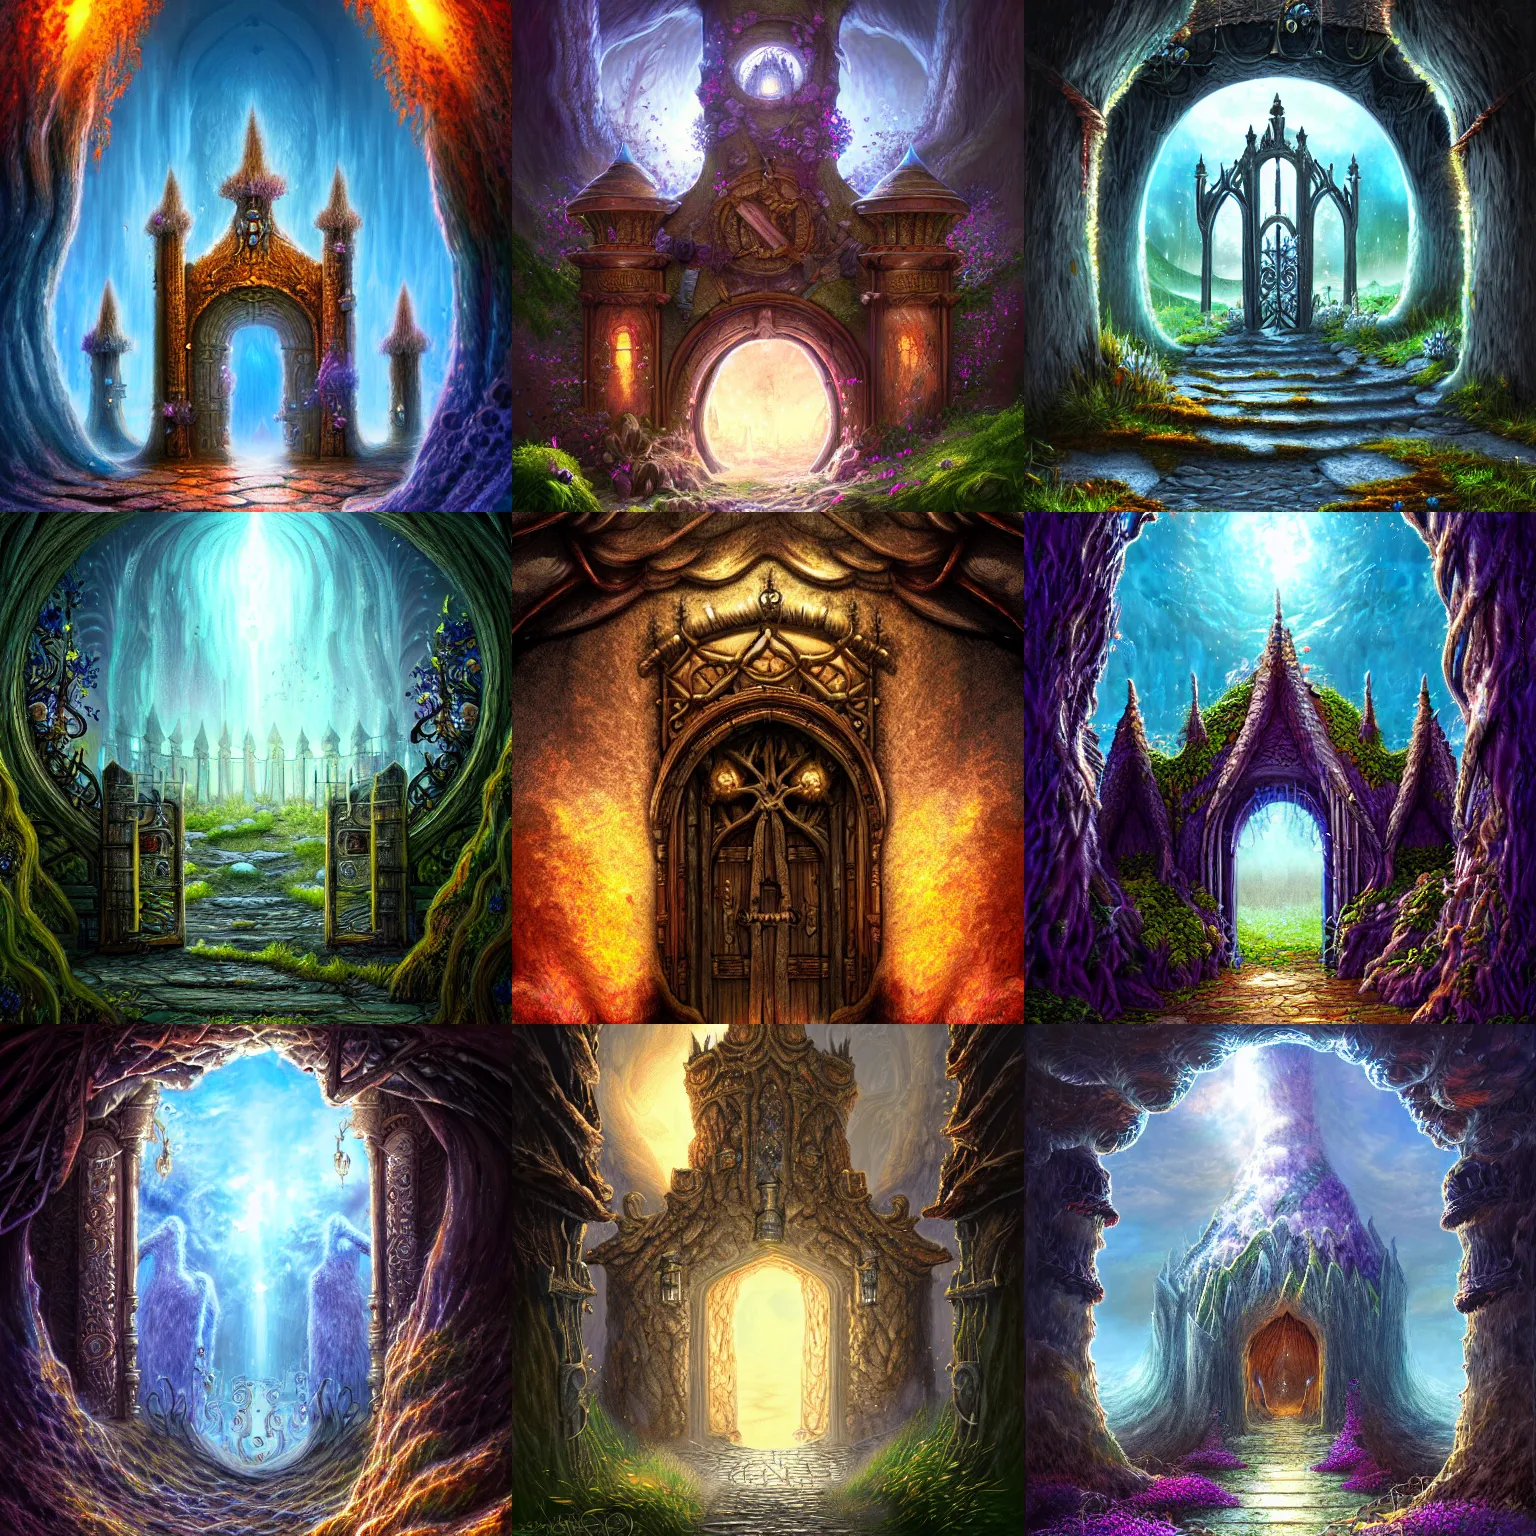 Prompt: The gate to the eternal kingdom of mycelia, fantasy, digital art, HD, detailed.